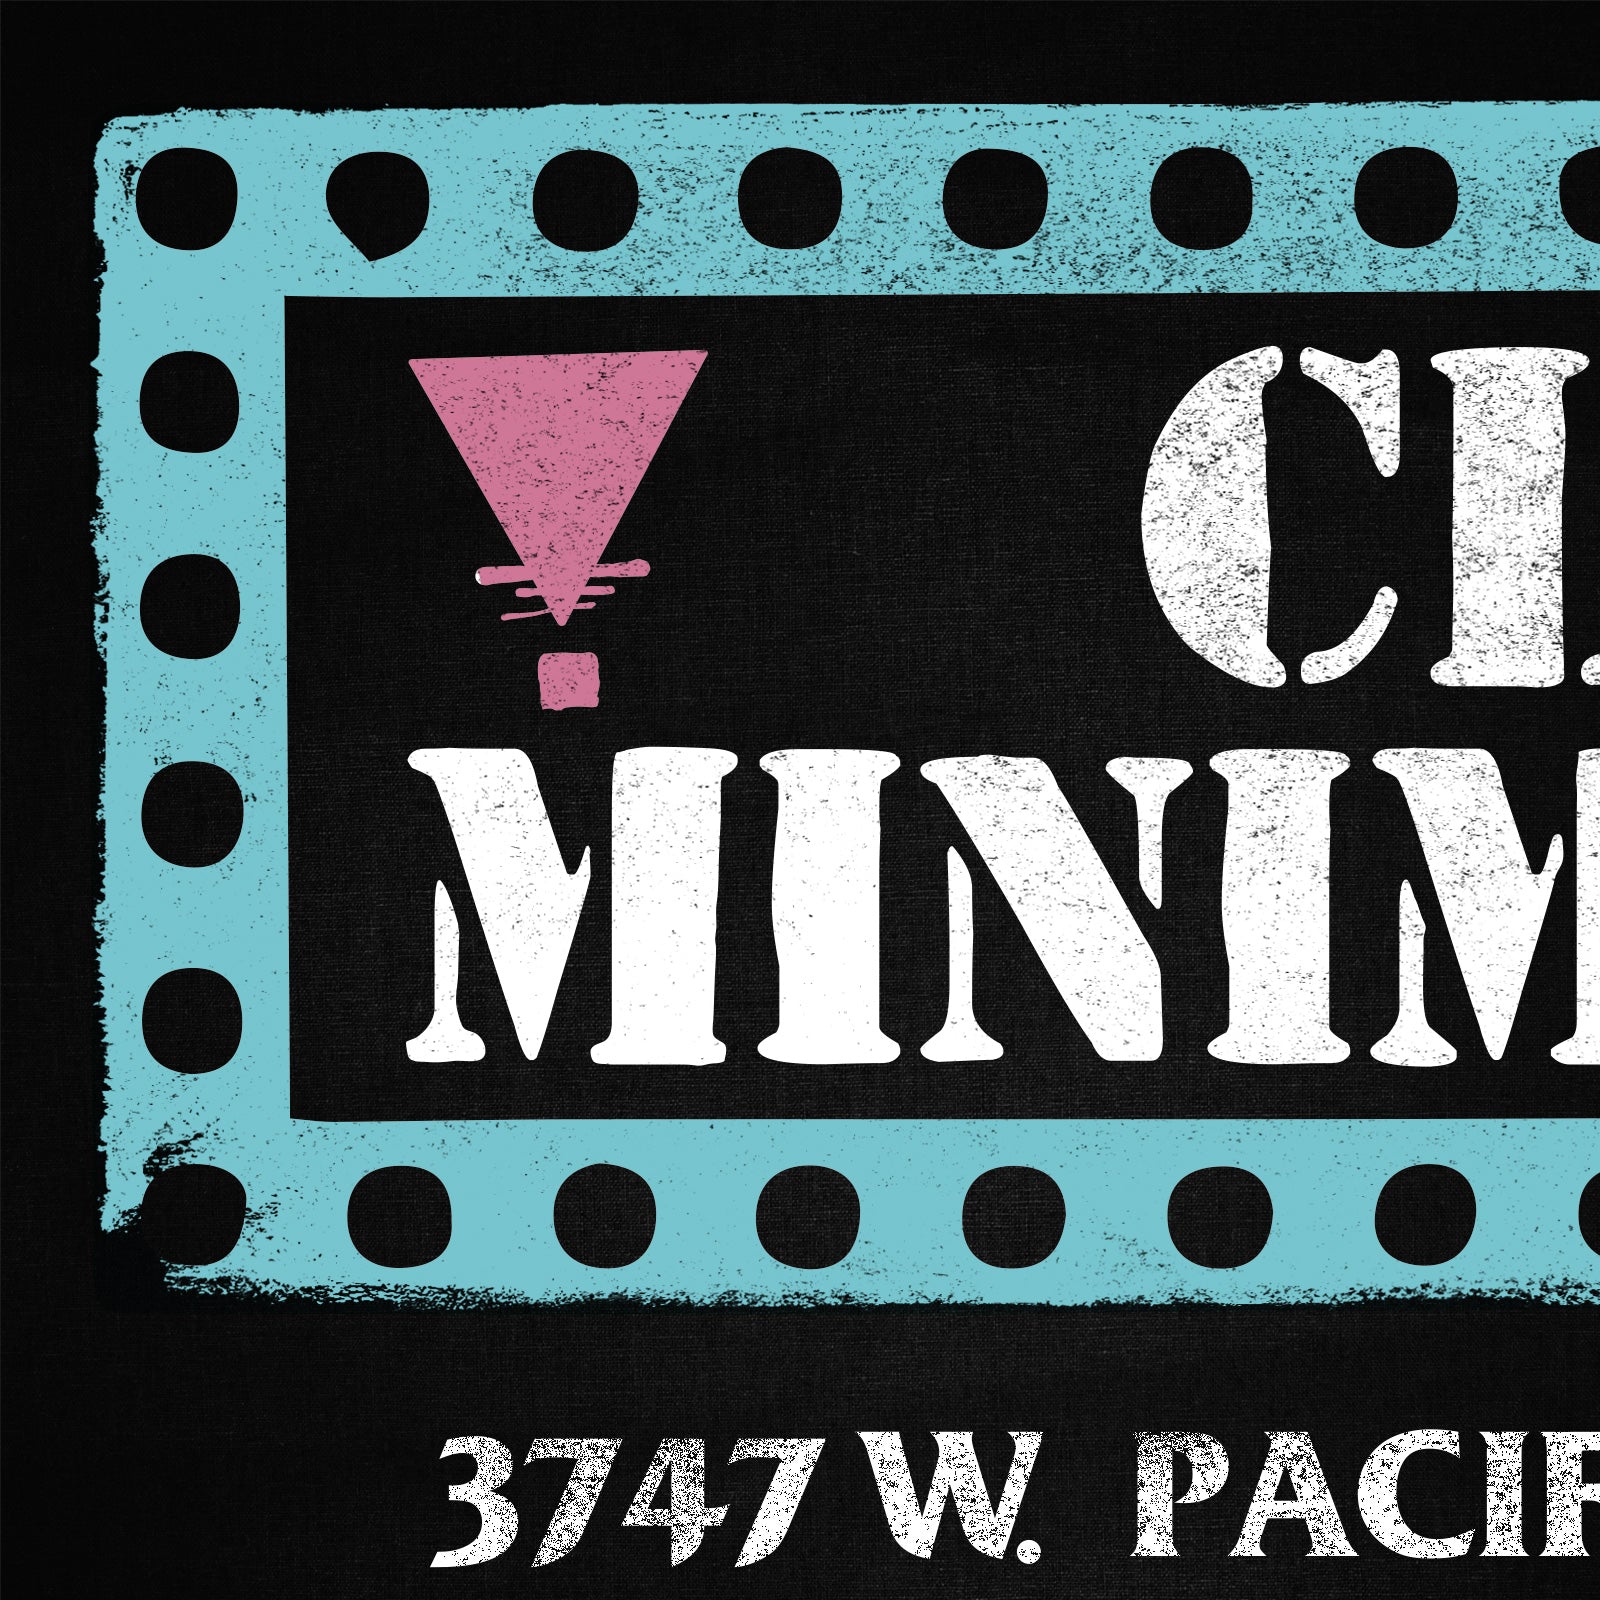 Club Minimal T-shirt, Sacramento CA